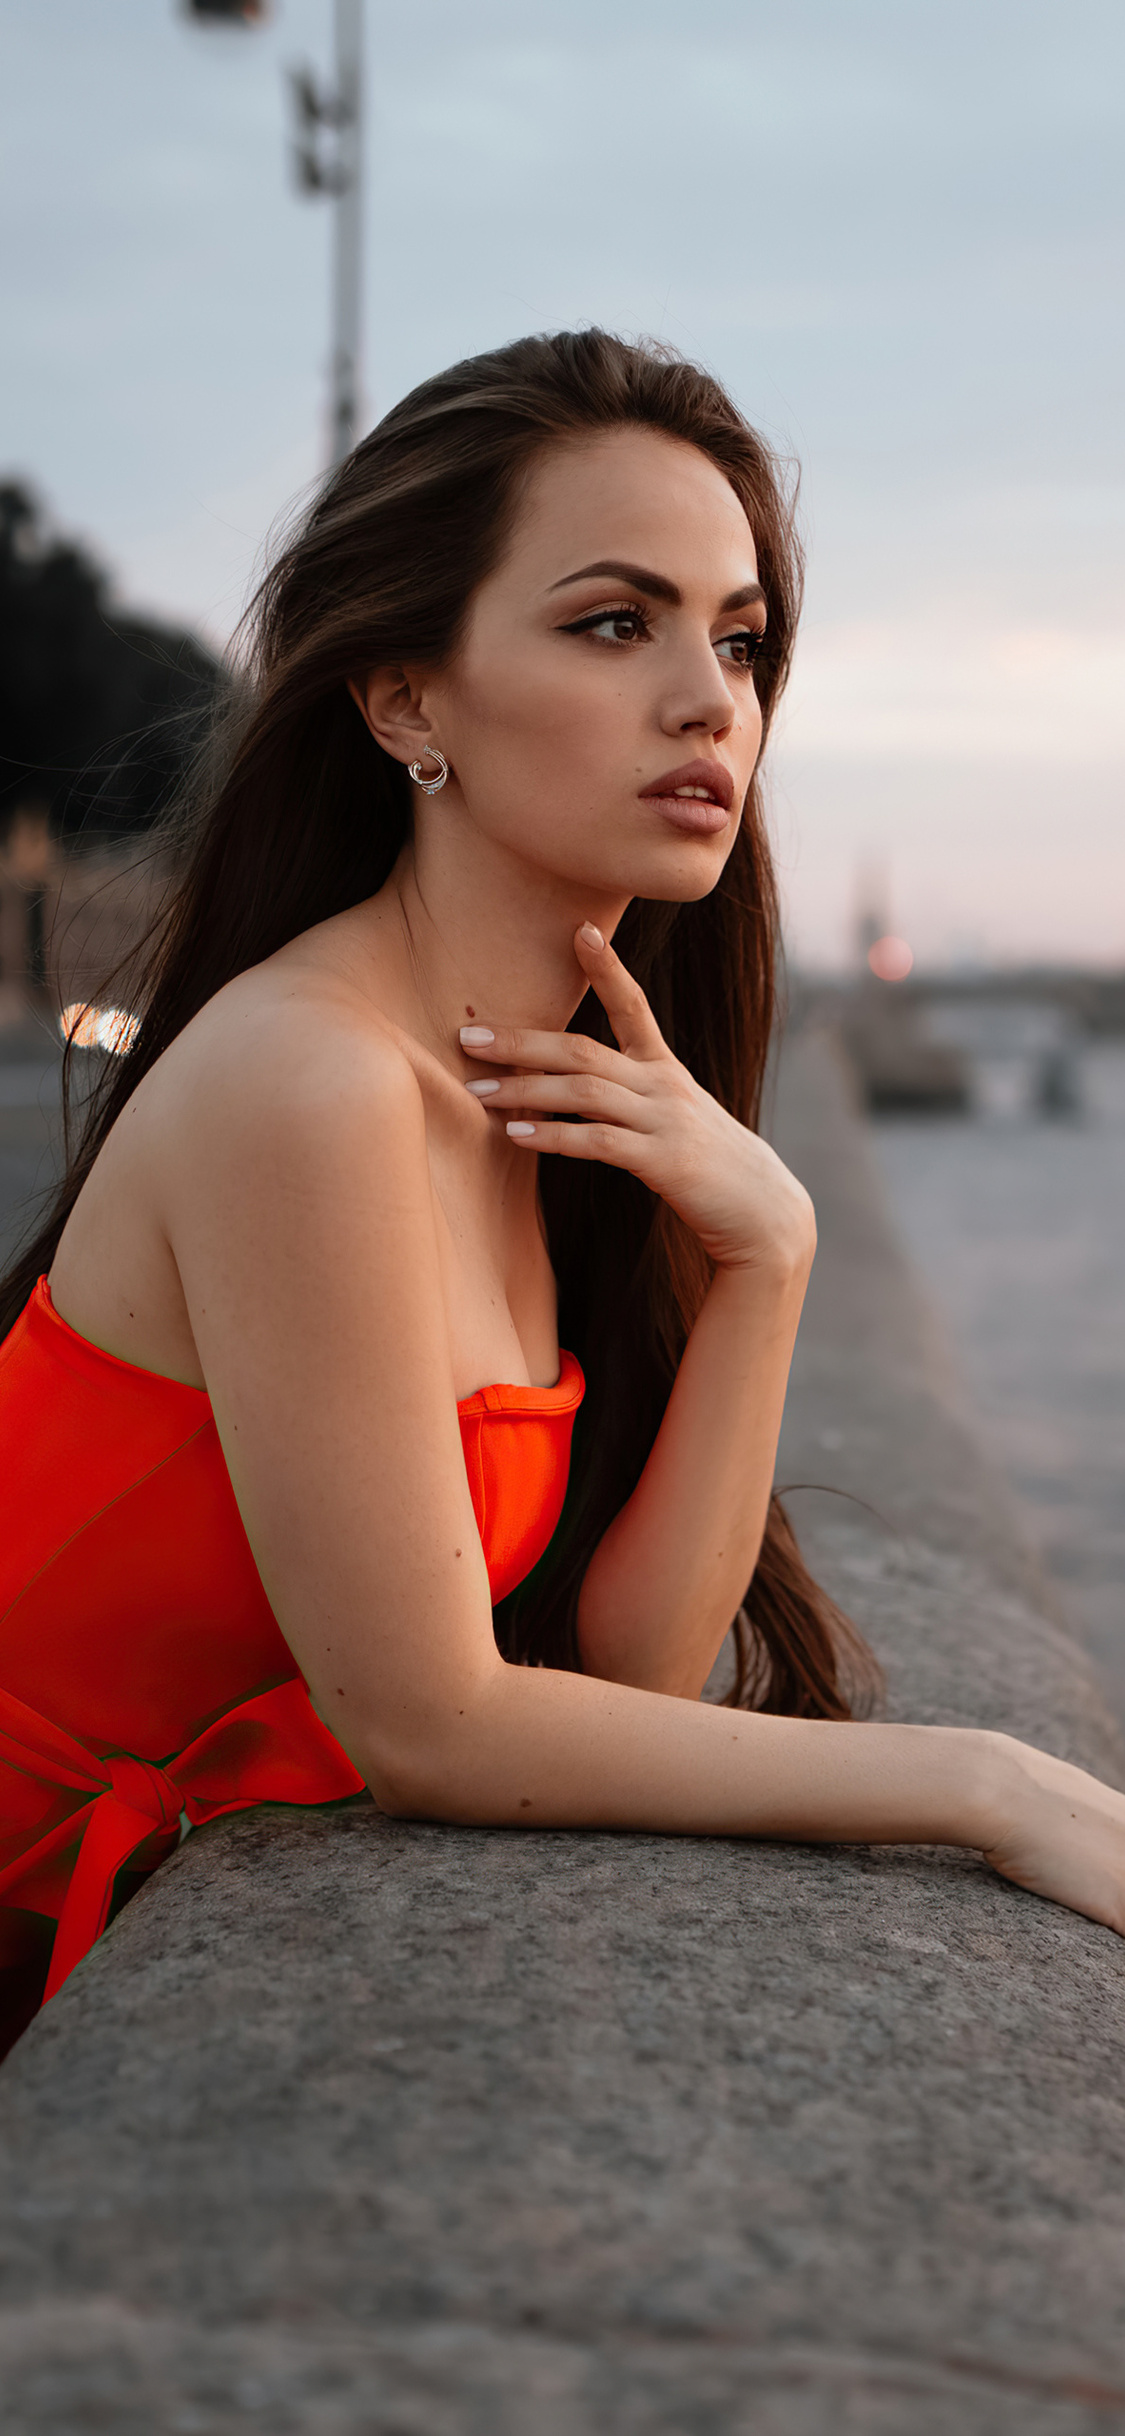 zemfira-ismailova-in-red-dress-8p.jpg